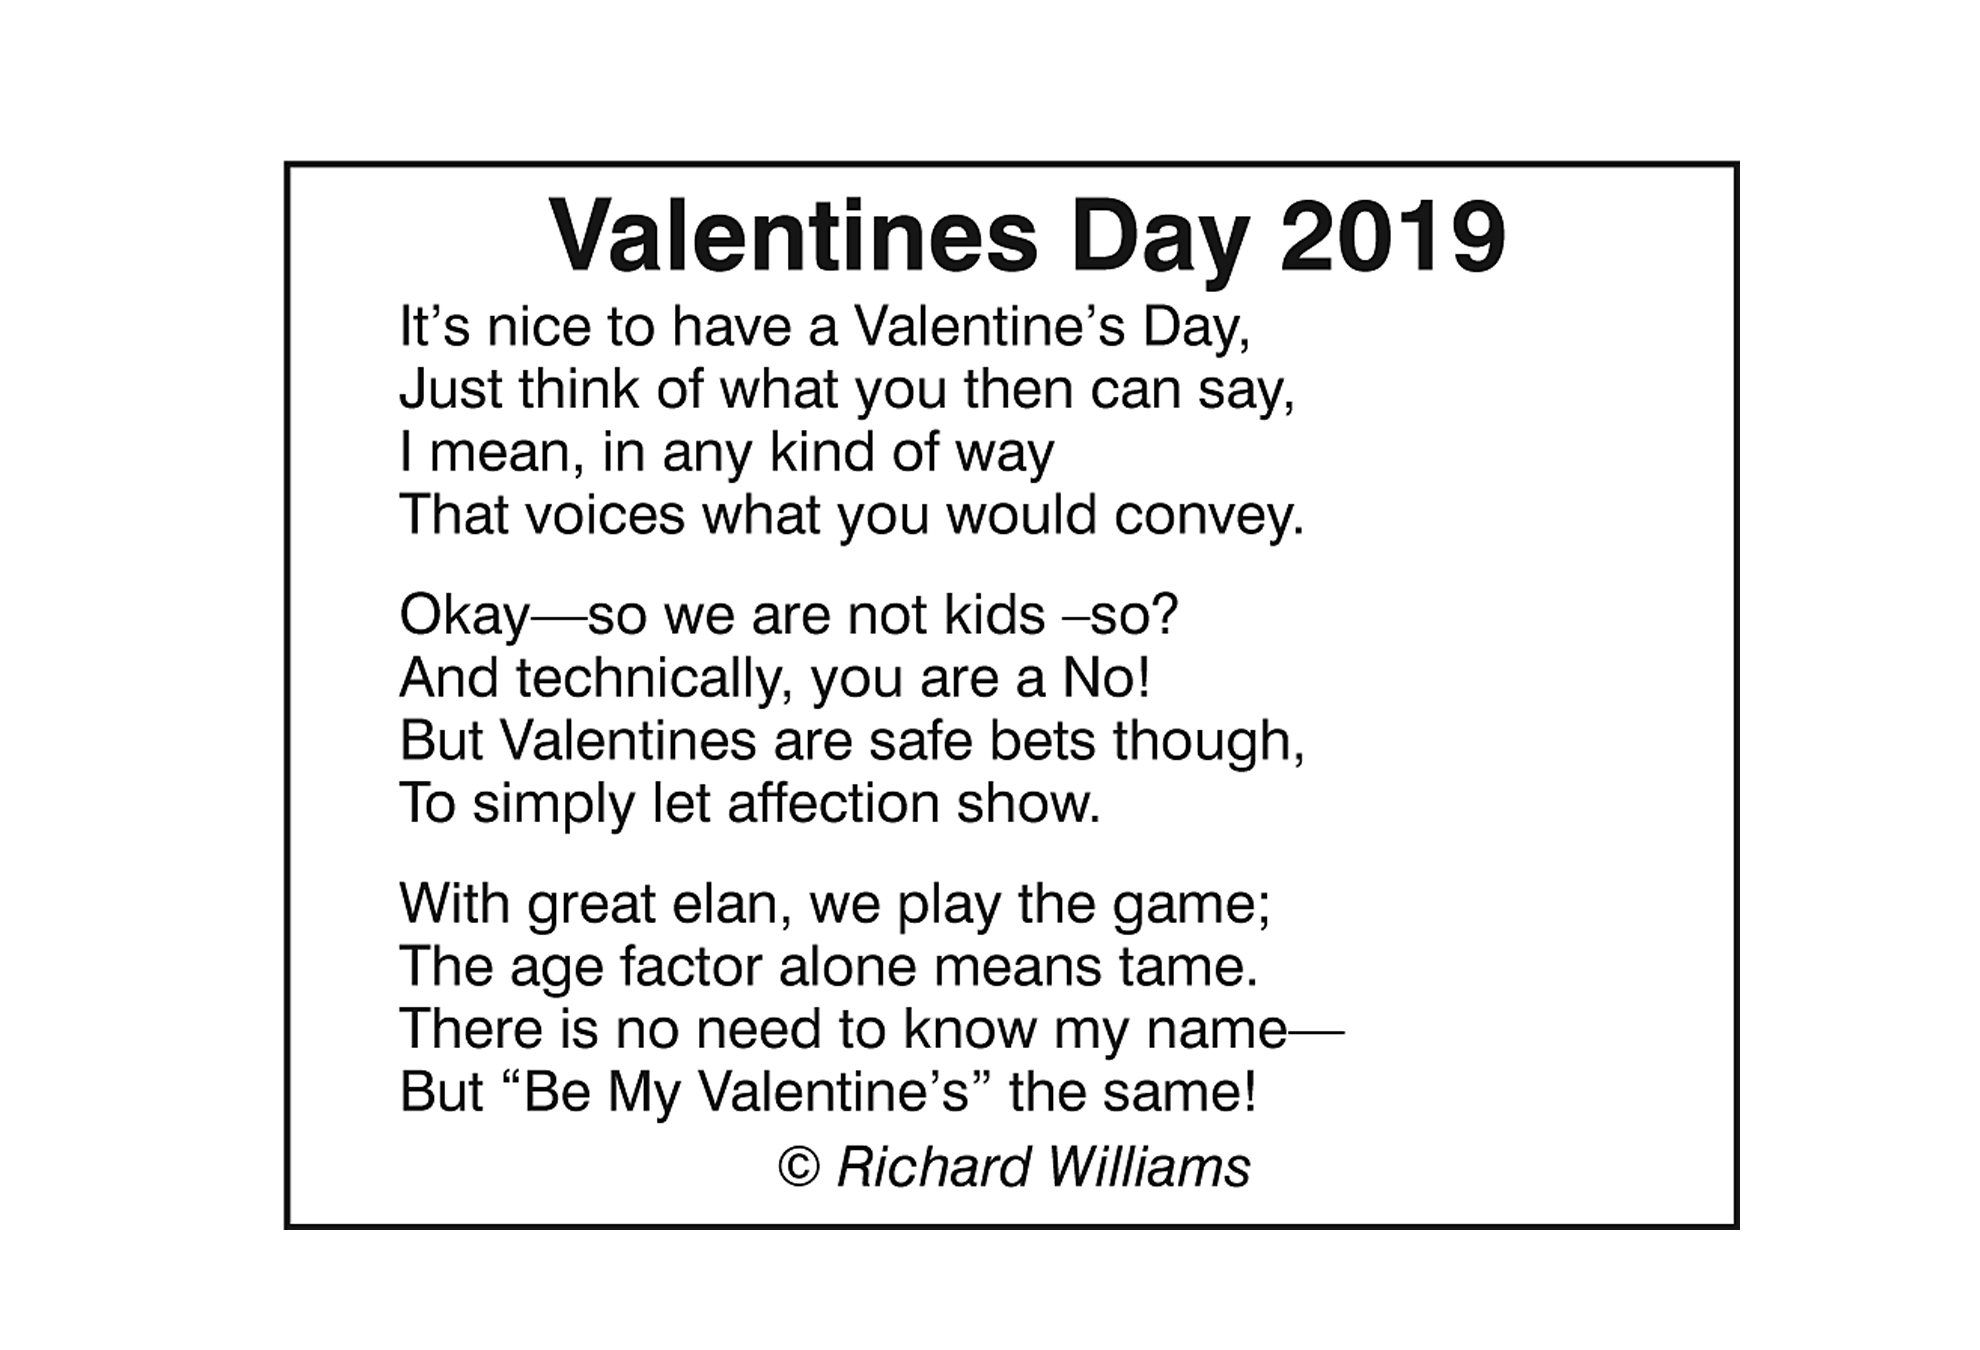 Richard Williams Poem: Valentines Day 2019